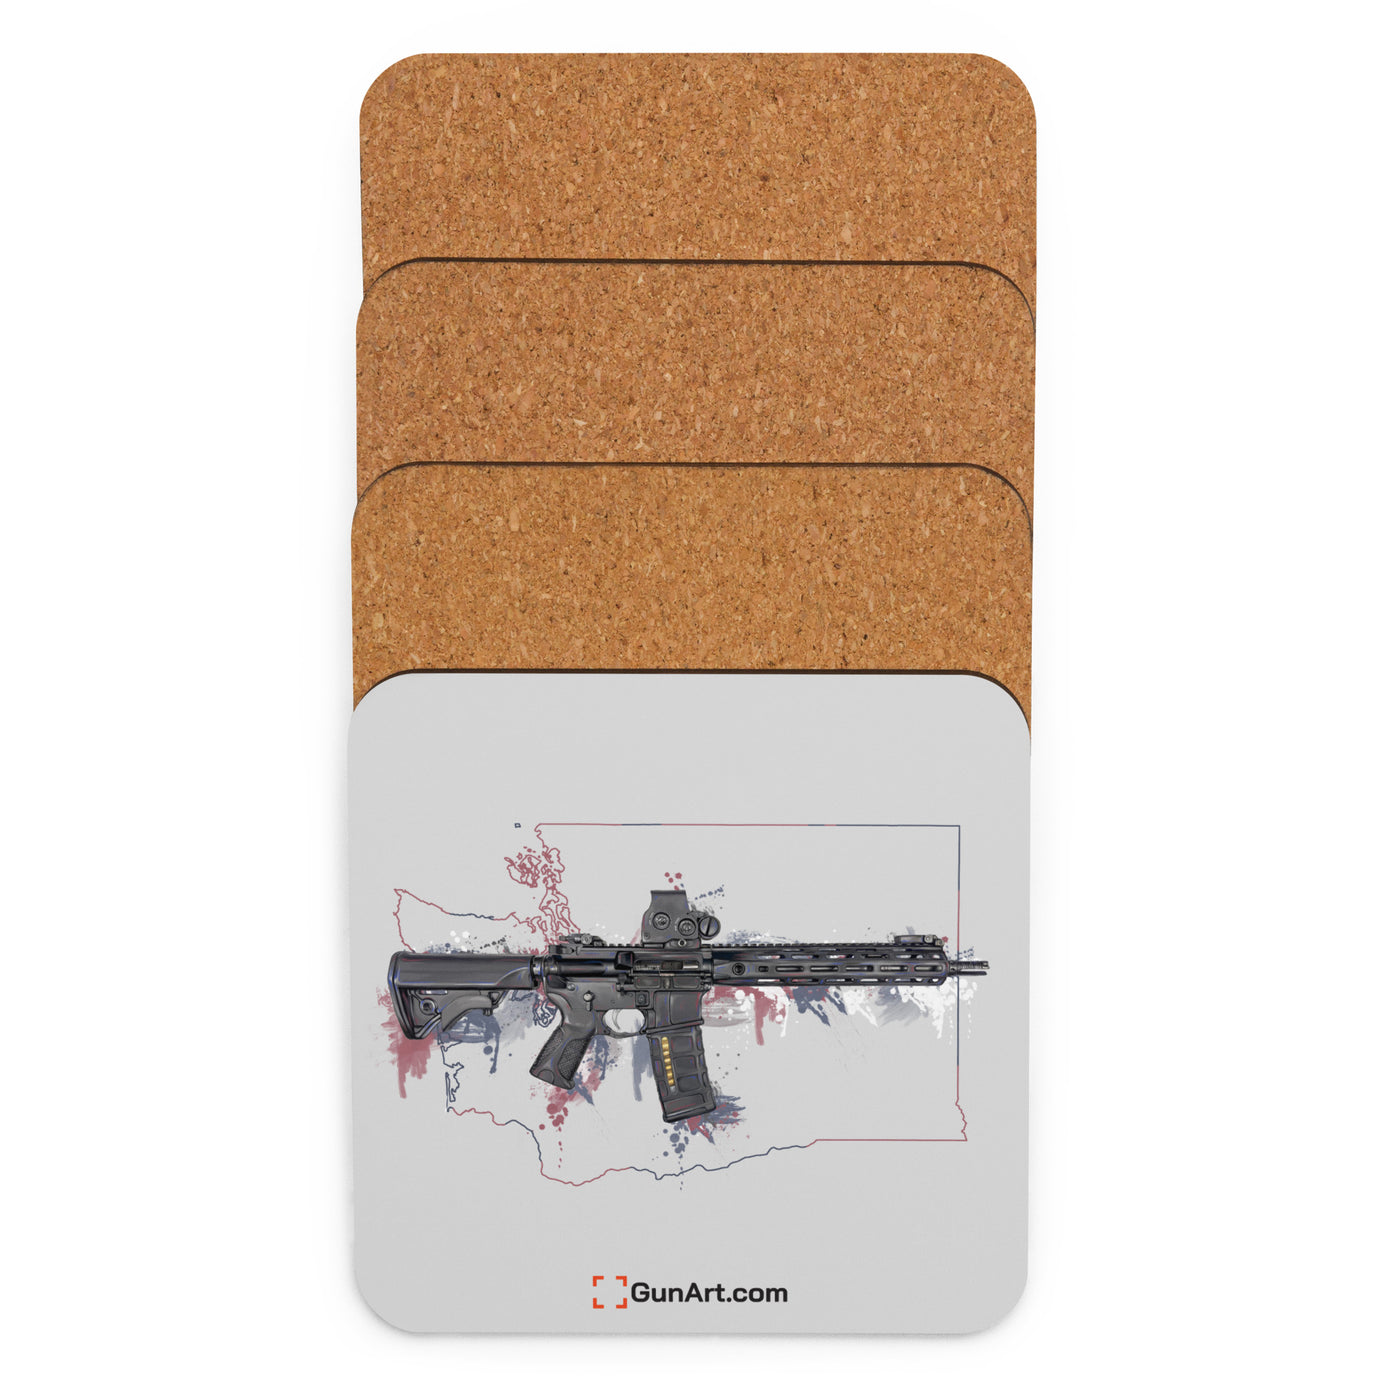 Defending Freedom - Washington - AR-15 State Cork-back Coaster - Colored State